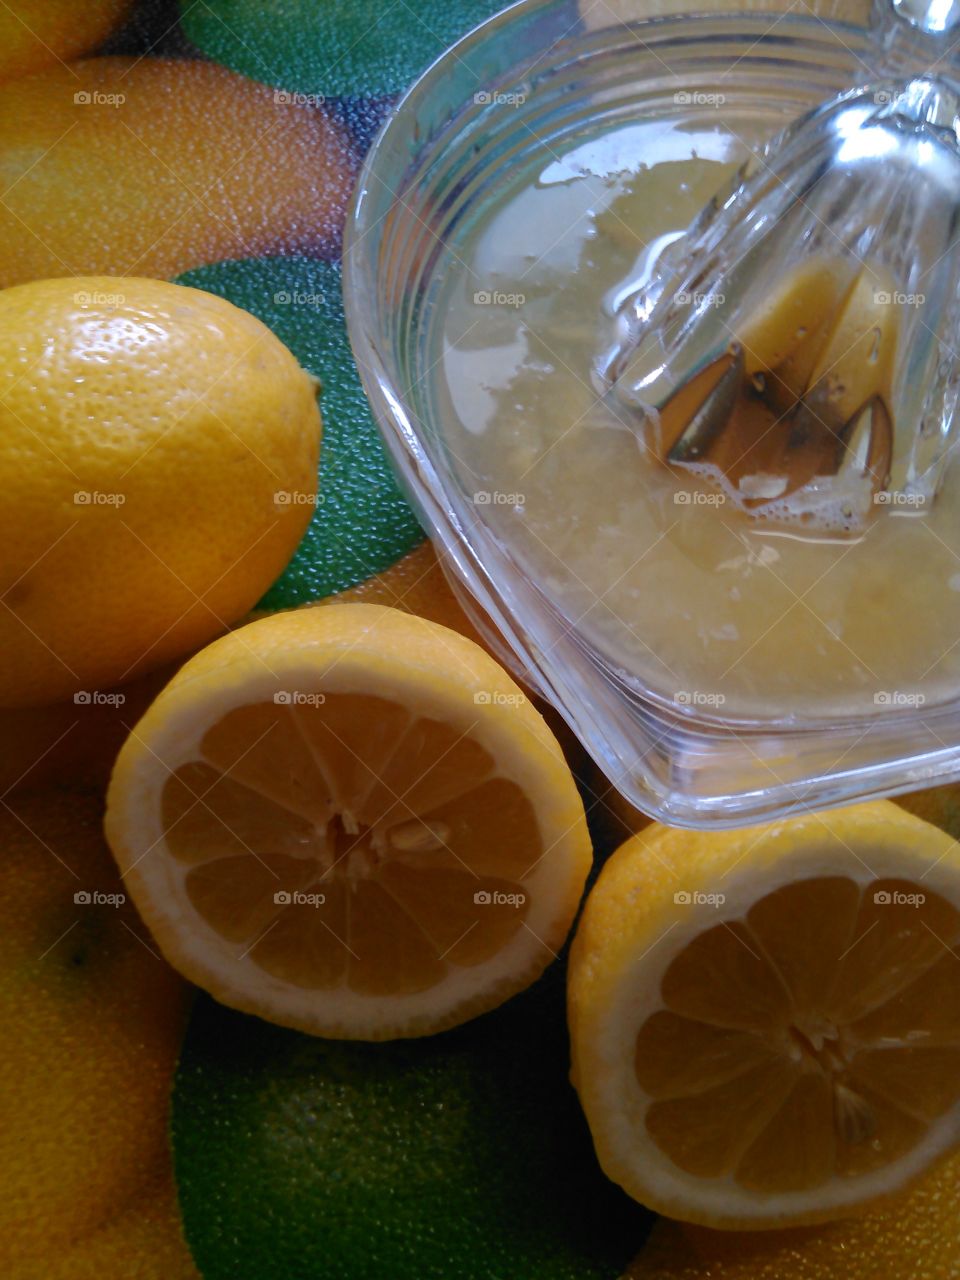 The making of fresh lemonade. Yummy fresh lemonade to be made...